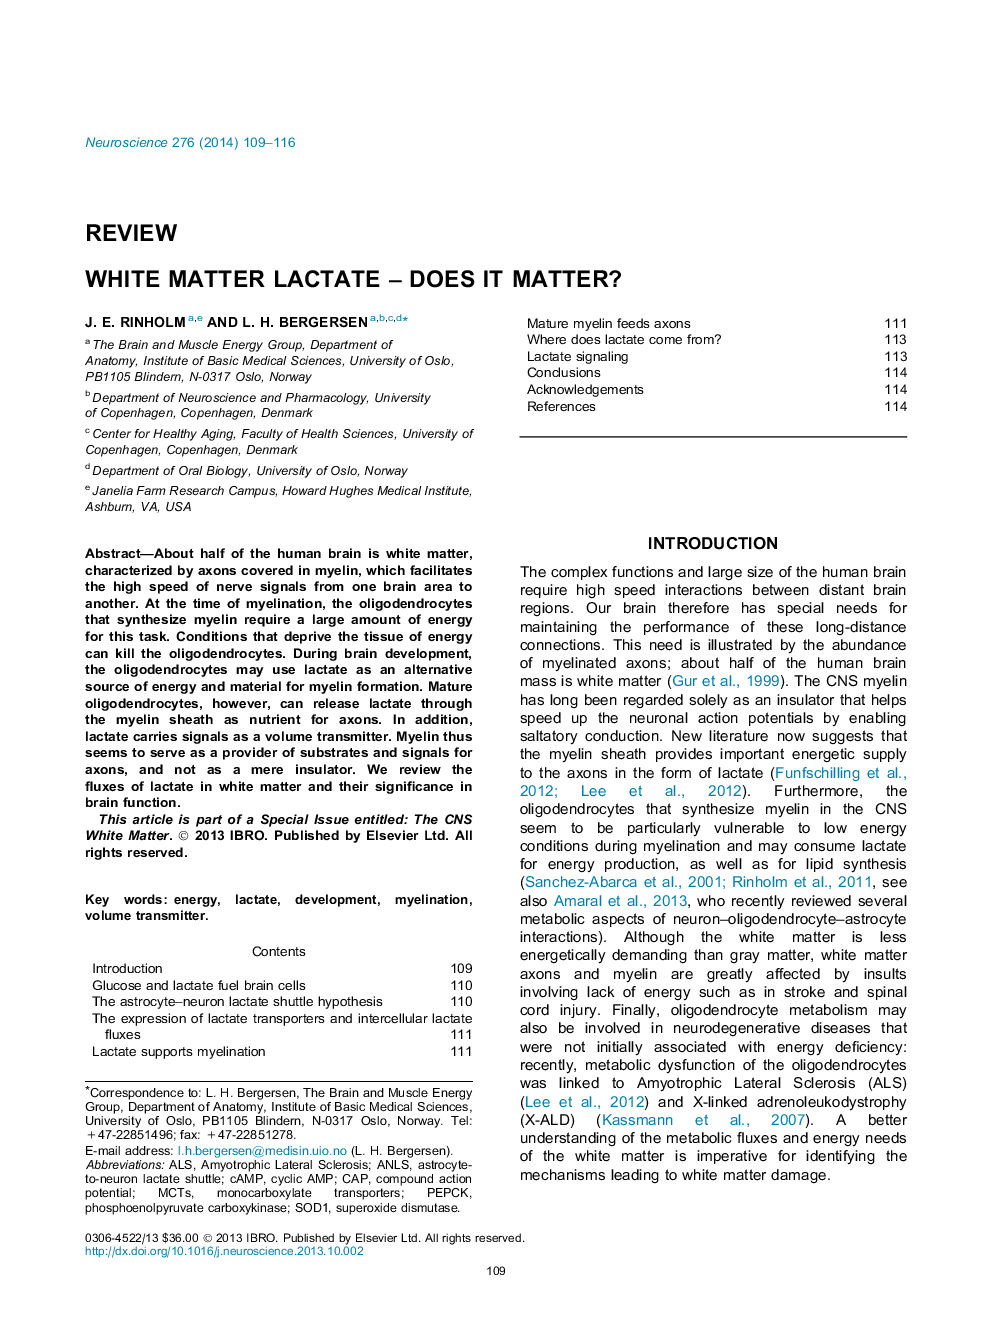 ReviewWhite matter lactate - Does it matter?